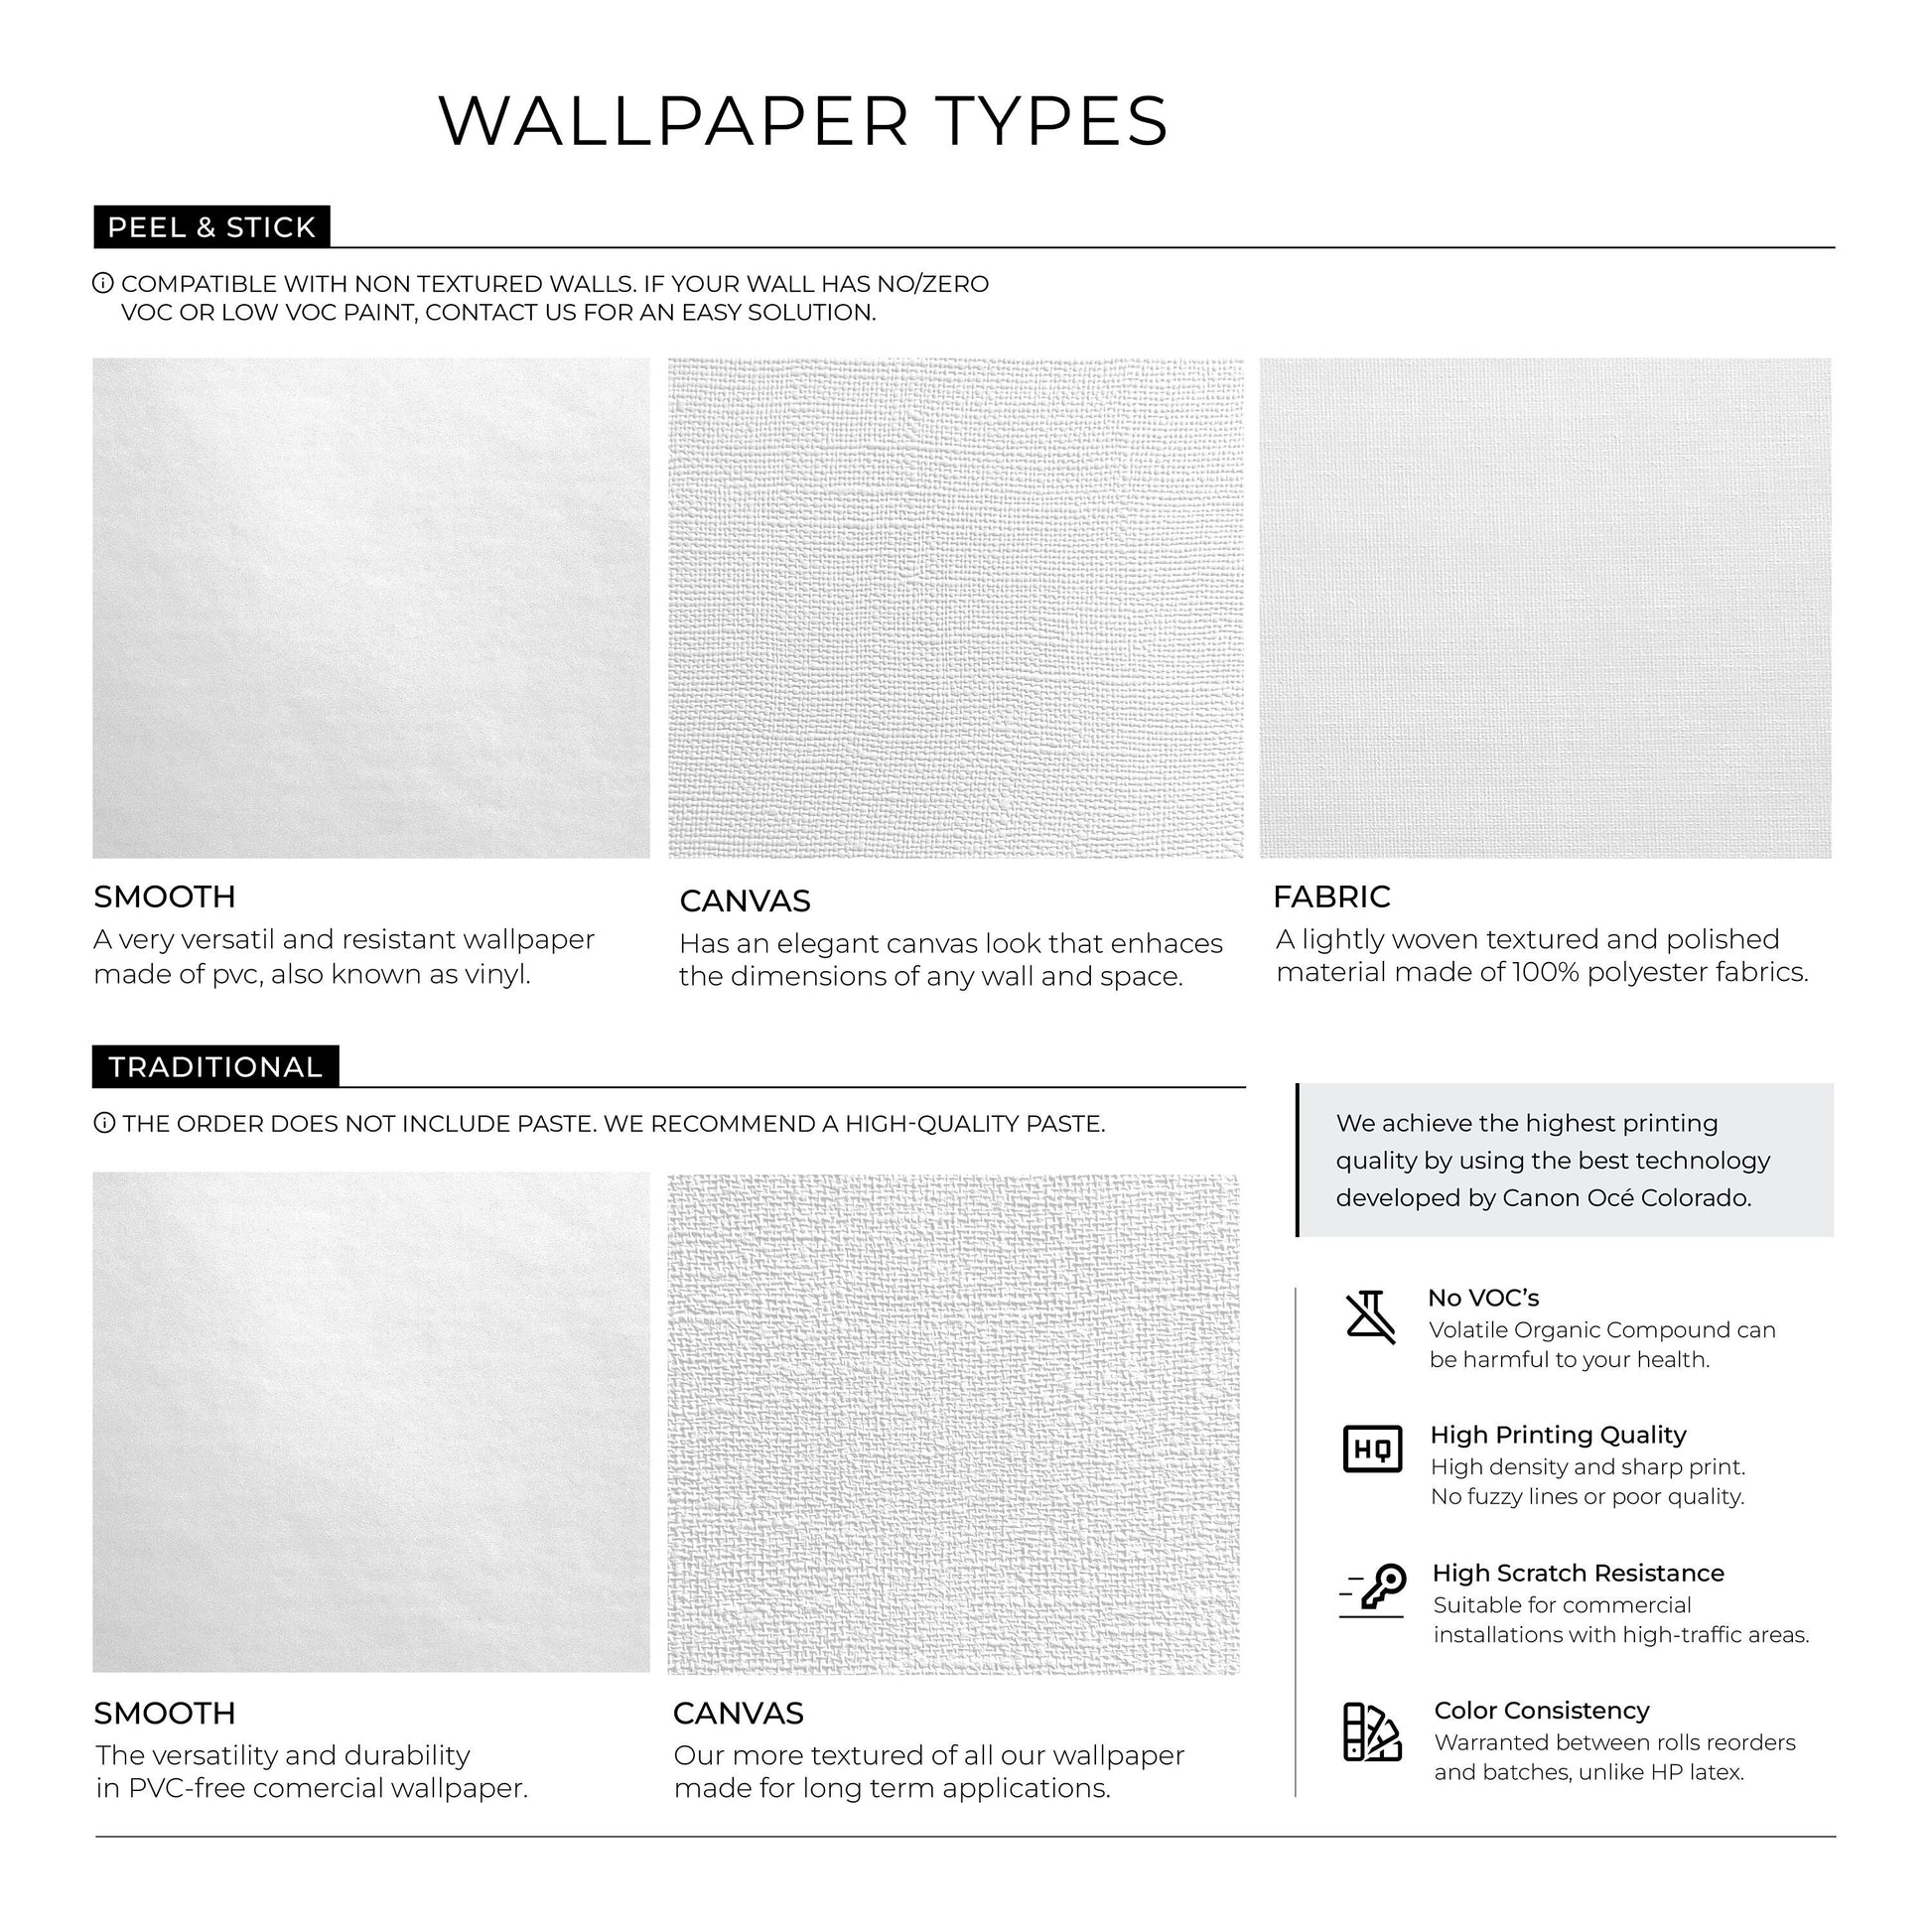 Ornamental Flowers Wallpaper - Removable Wallpaper Peel and Stick Wallpaper Wall Paper - X033